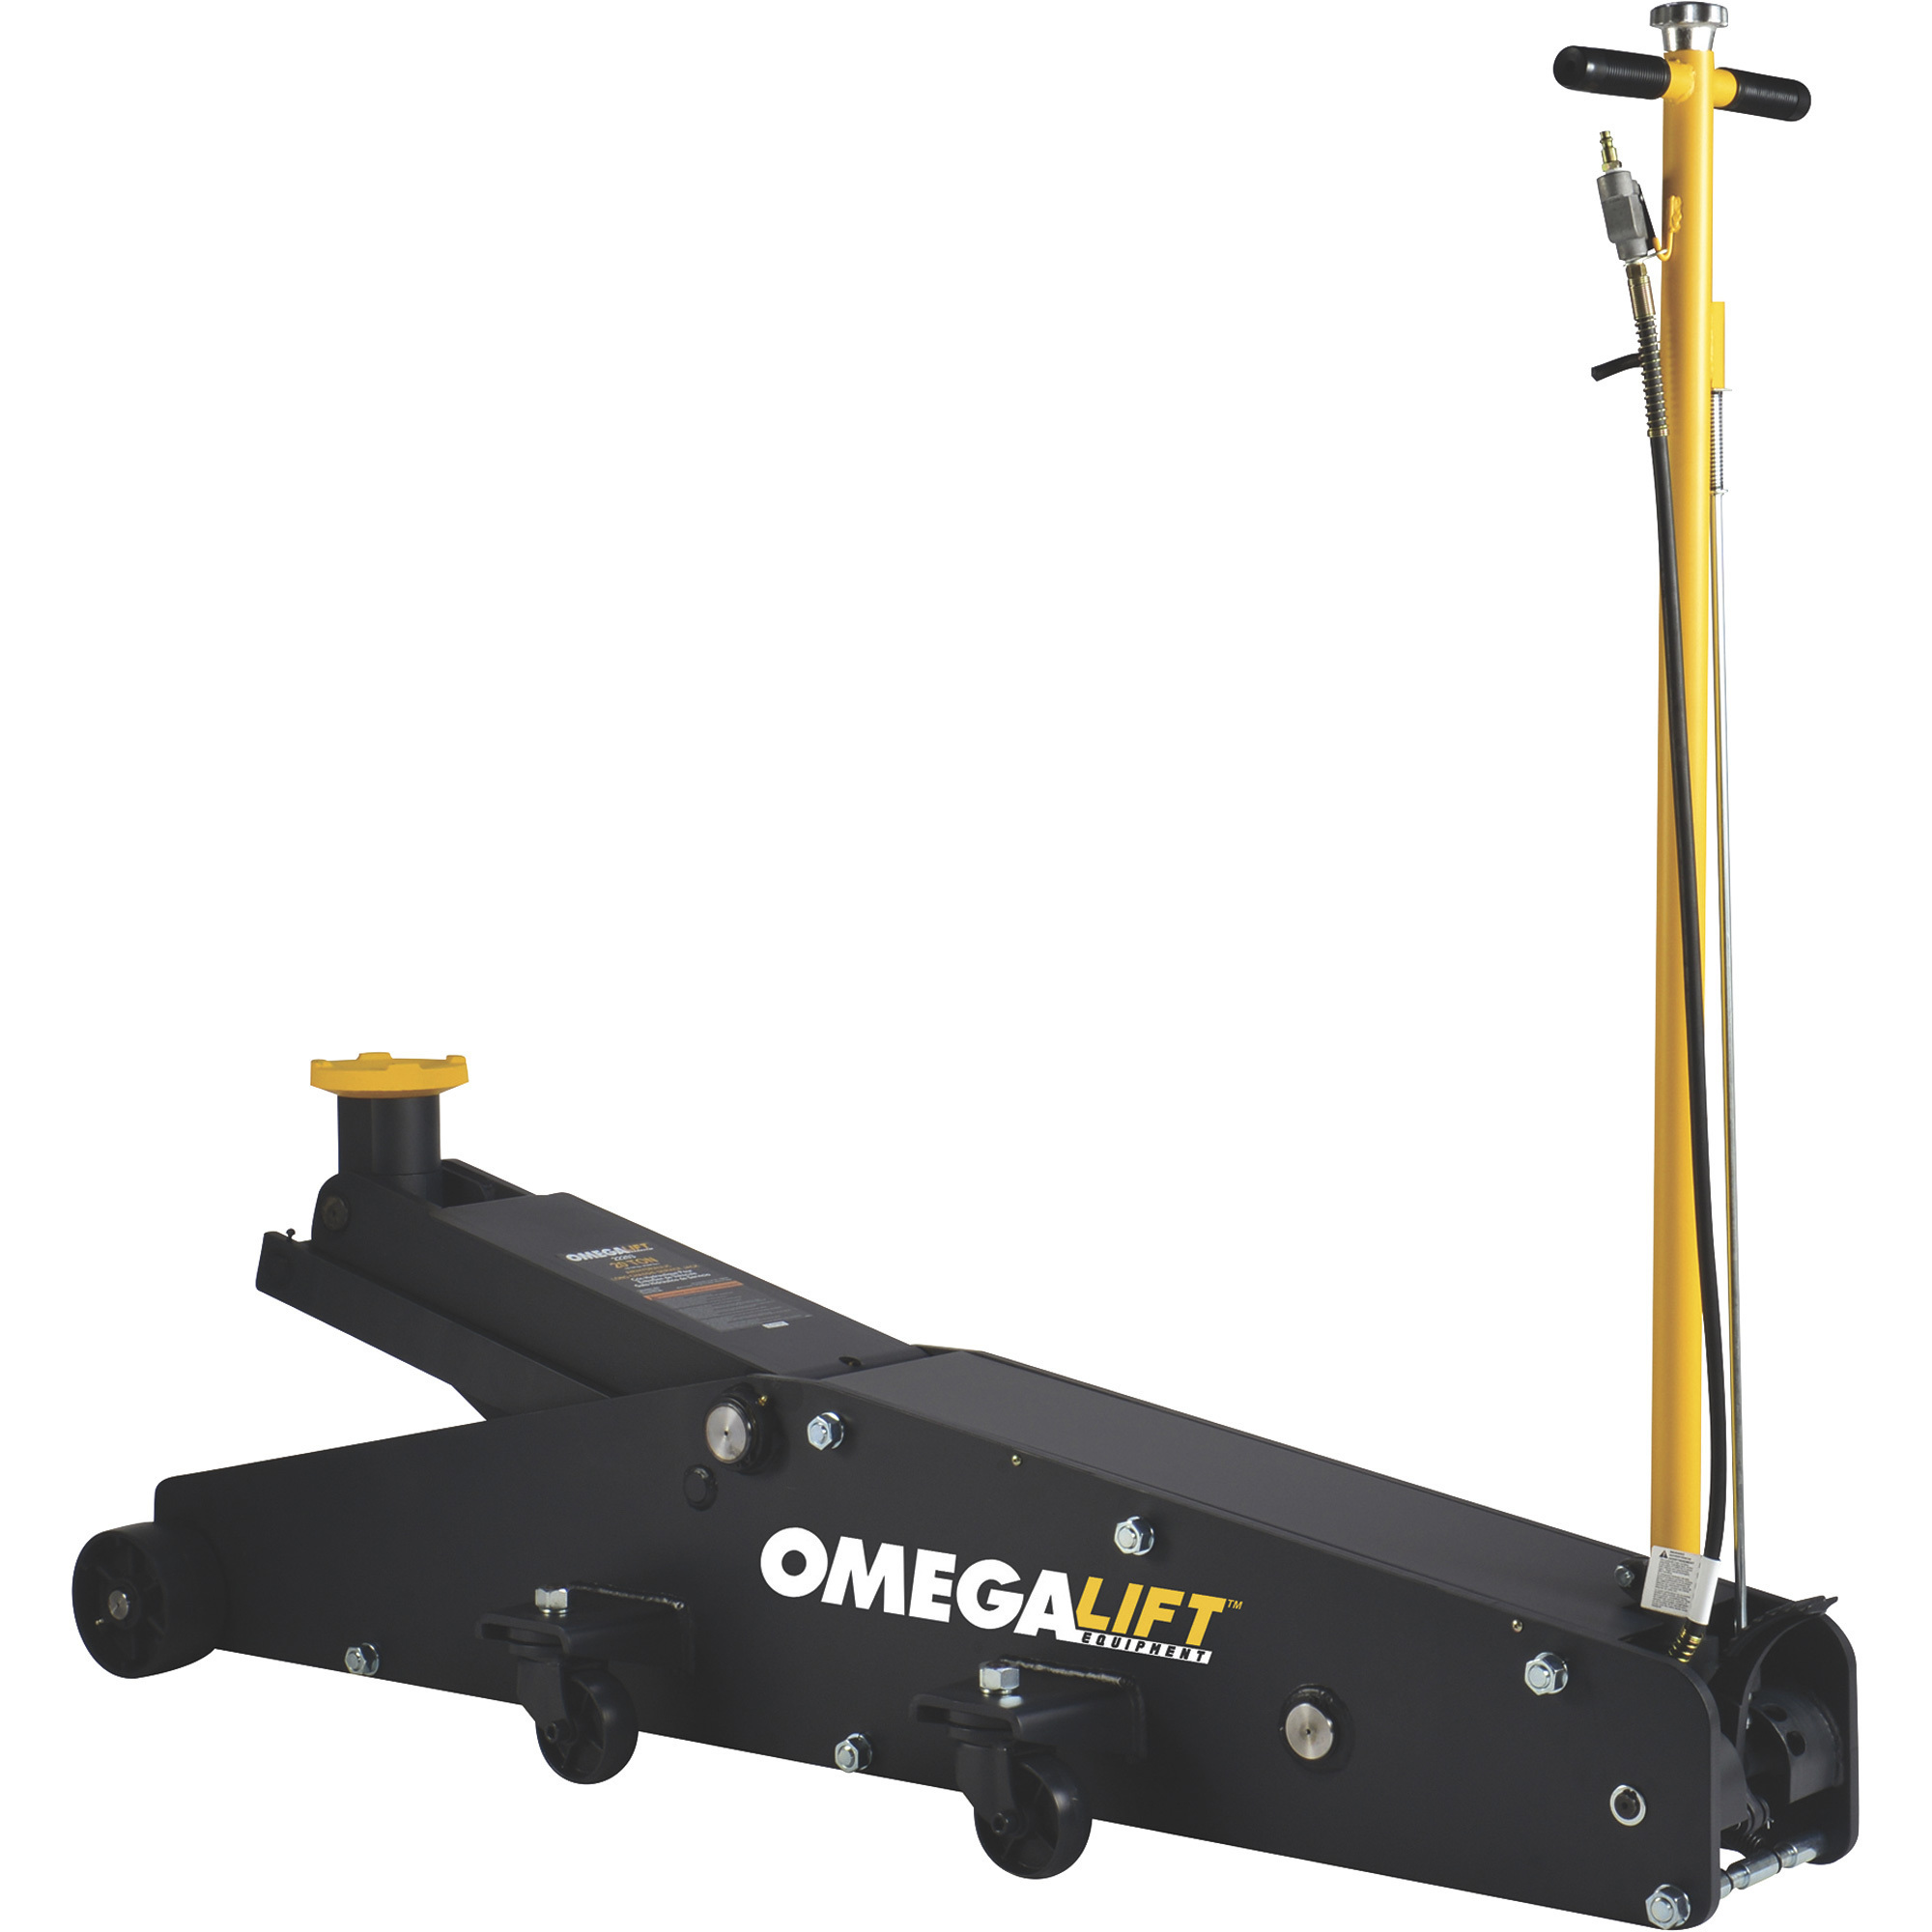 Omega 20-Ton Hydraulic Air/Manual Floor Jack, Model 22203